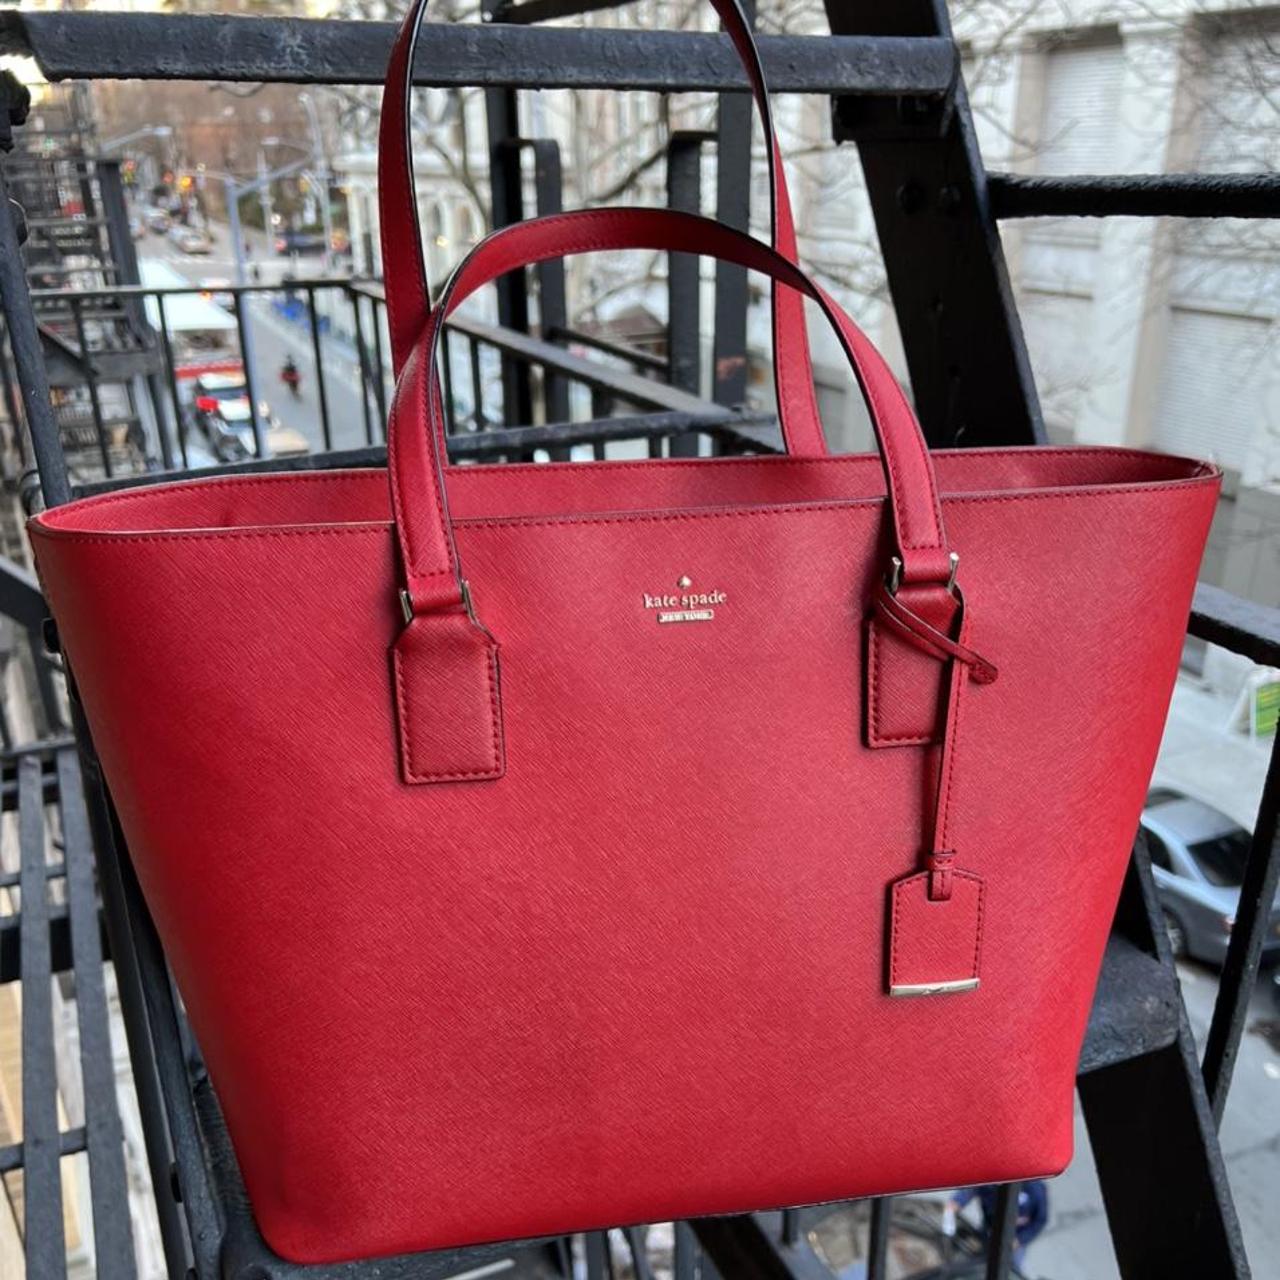 Kate Spade NY Woman's Small Loden Handbag Purse, Red, W/Dust Cover | eBay